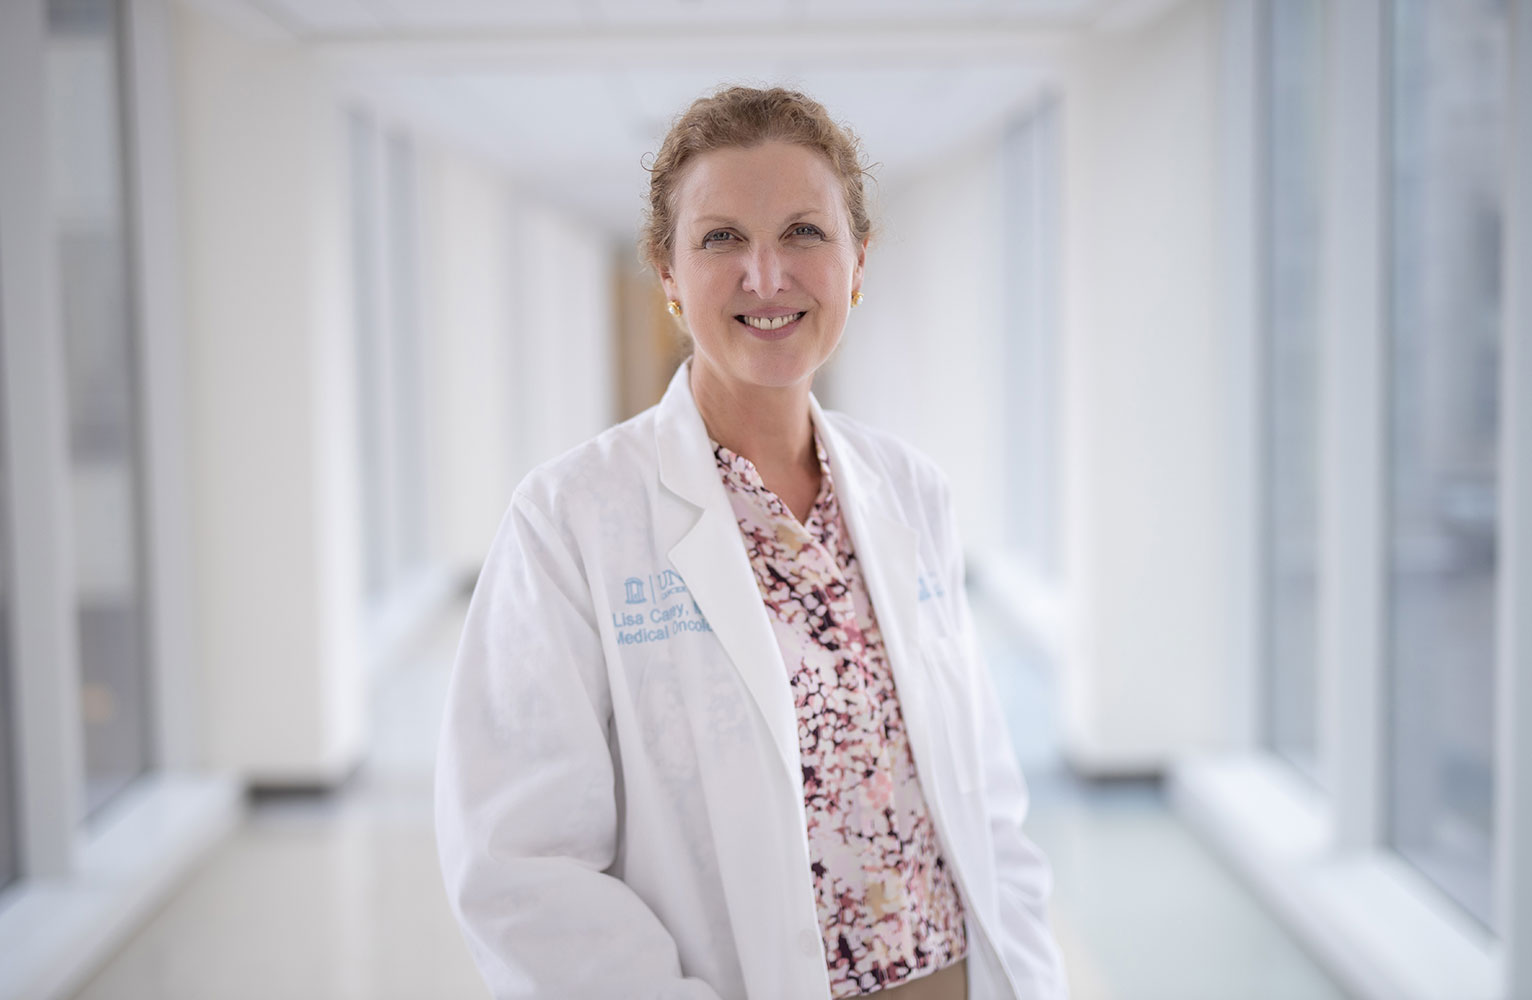 Dr. Lisa Carey poses in a hospital hallway